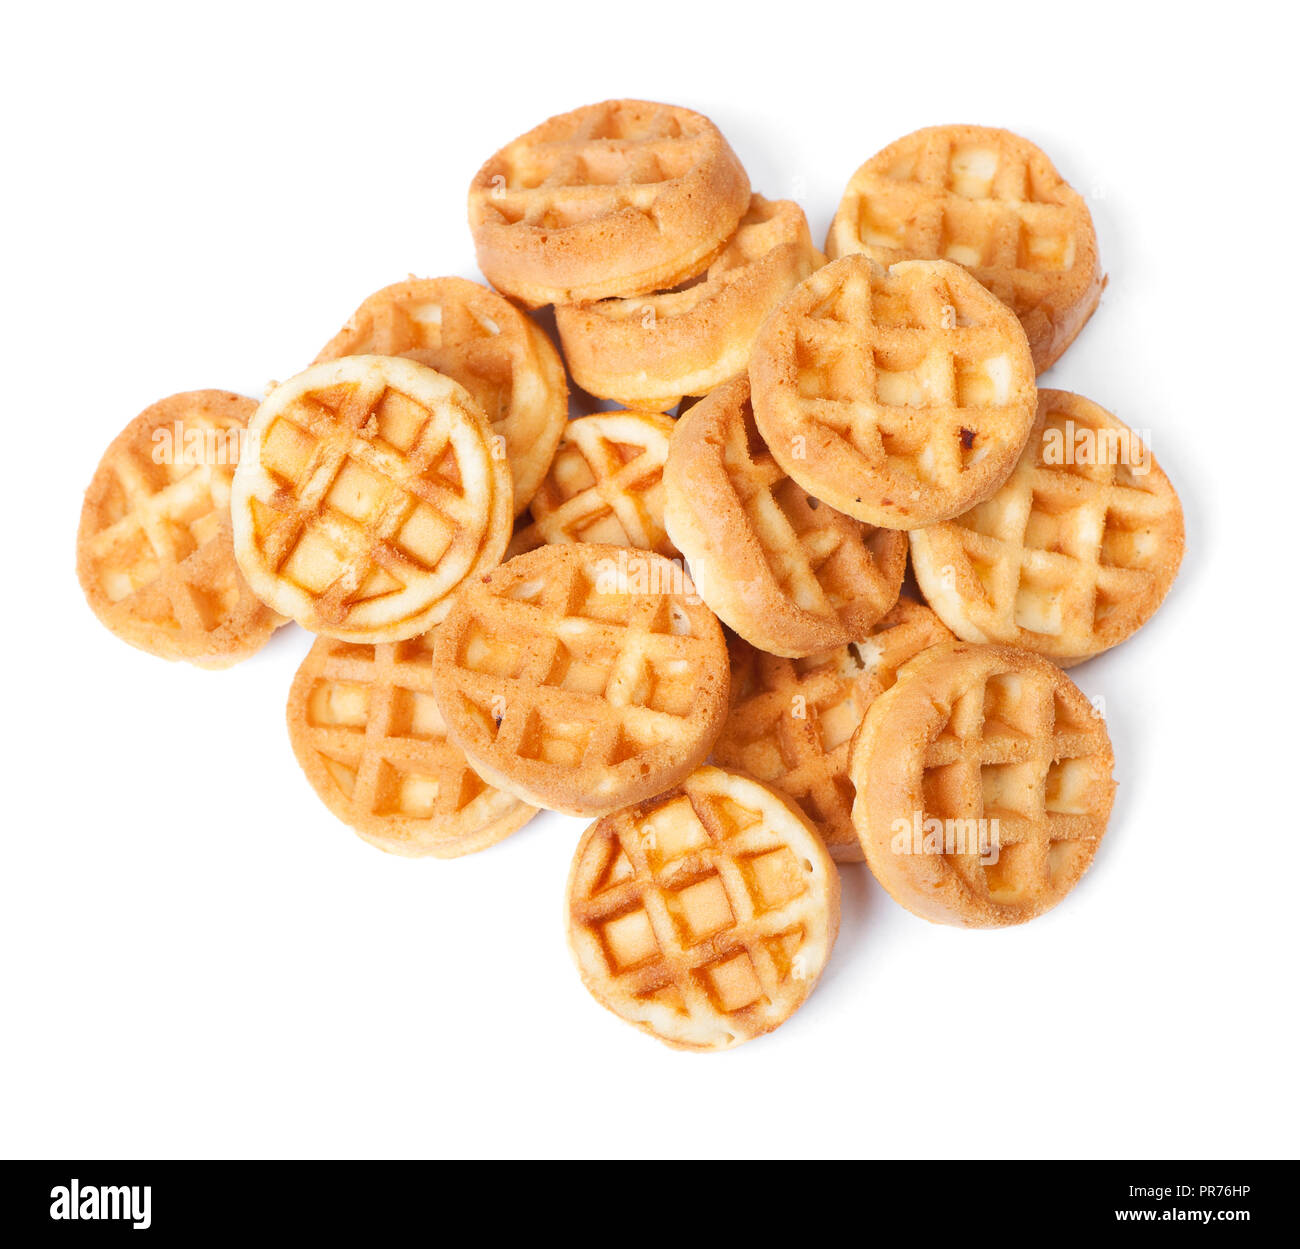 https://c8.alamy.com/comp/PR76HP/group-of-tasty-round-mini-waffles-isolated-on-white-background-PR76HP.jpg